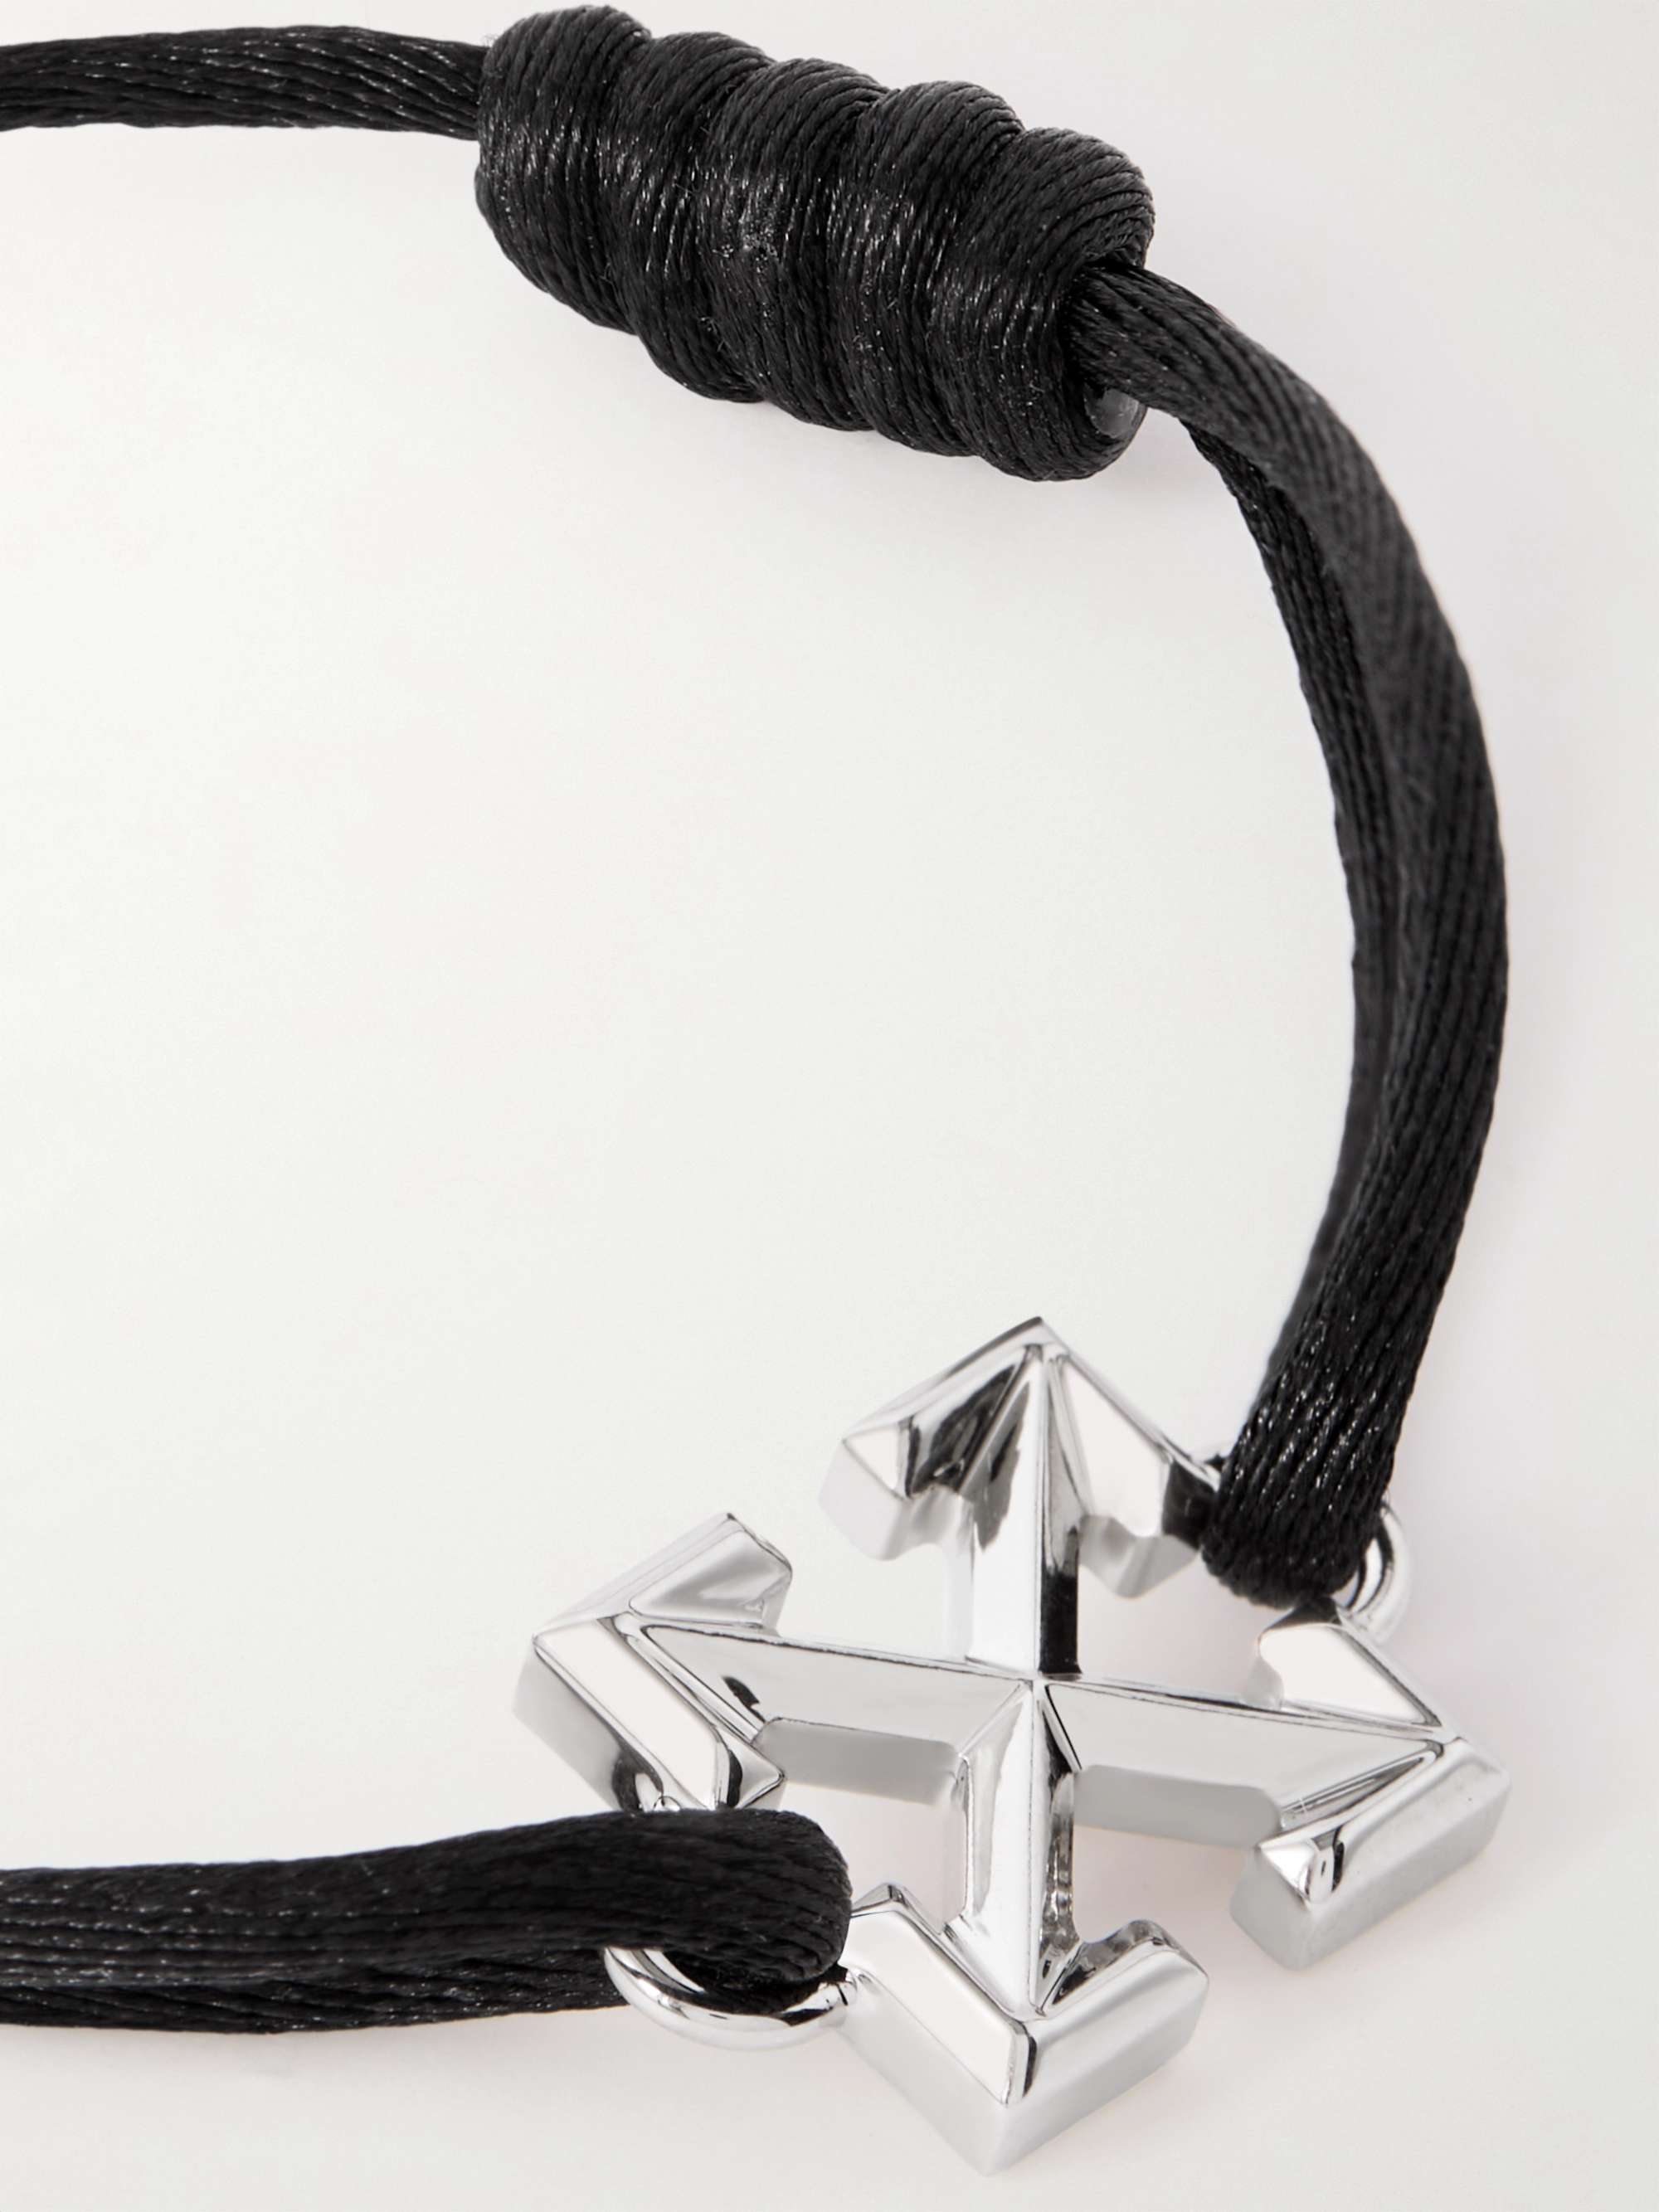 OFF-WHITE Arrow Silver-Tone Cord Bracelet